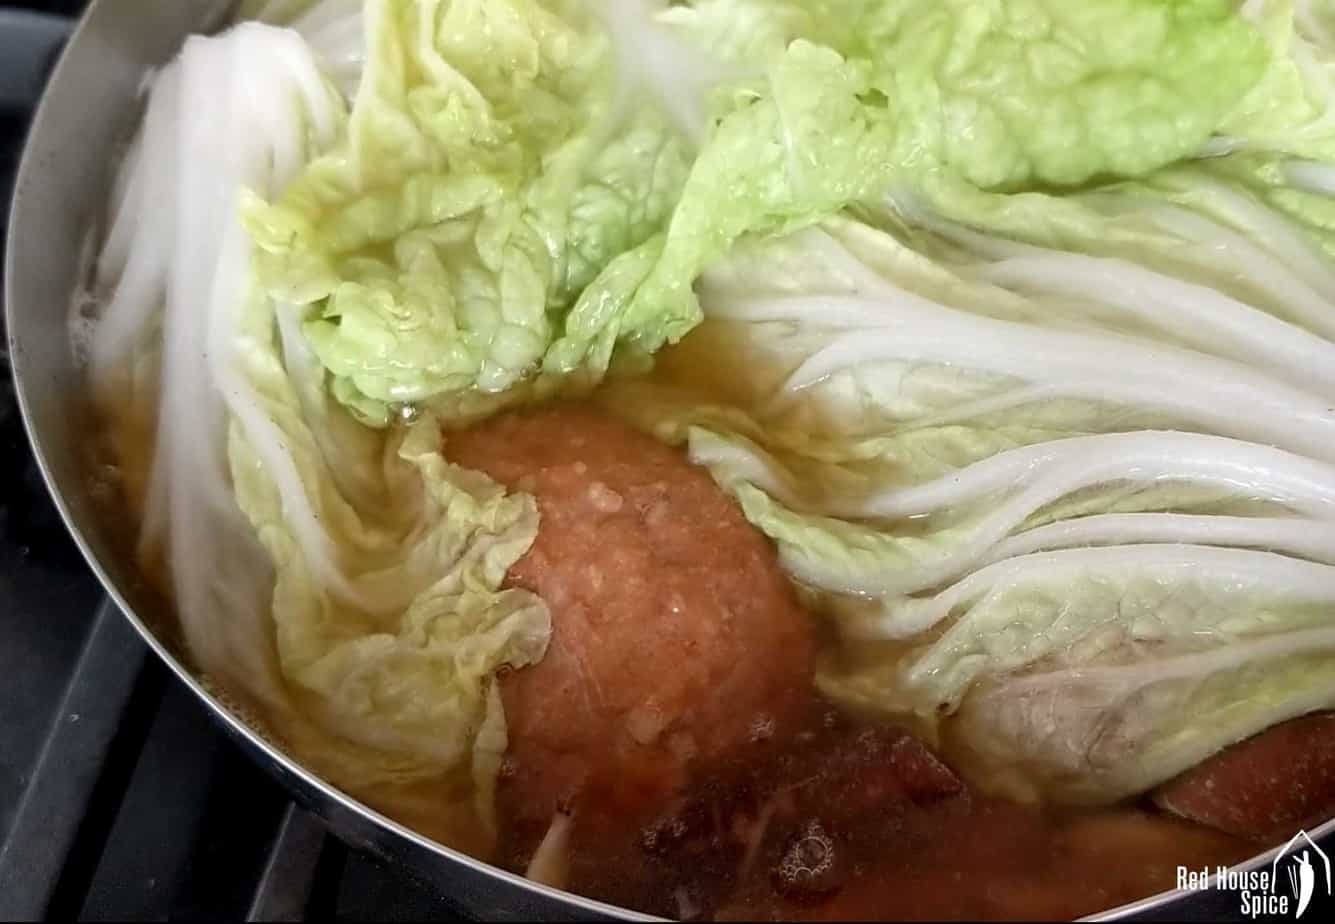 Napa cabbage over meatballs